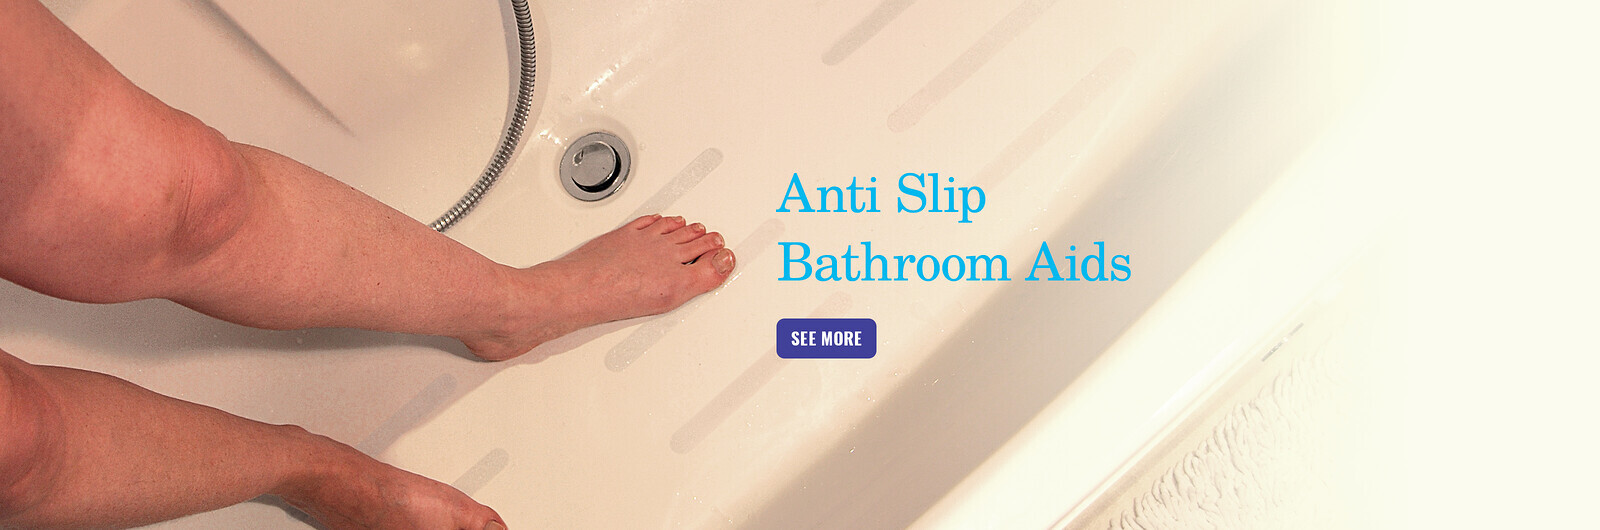 Anti Slip Bathroom Aids